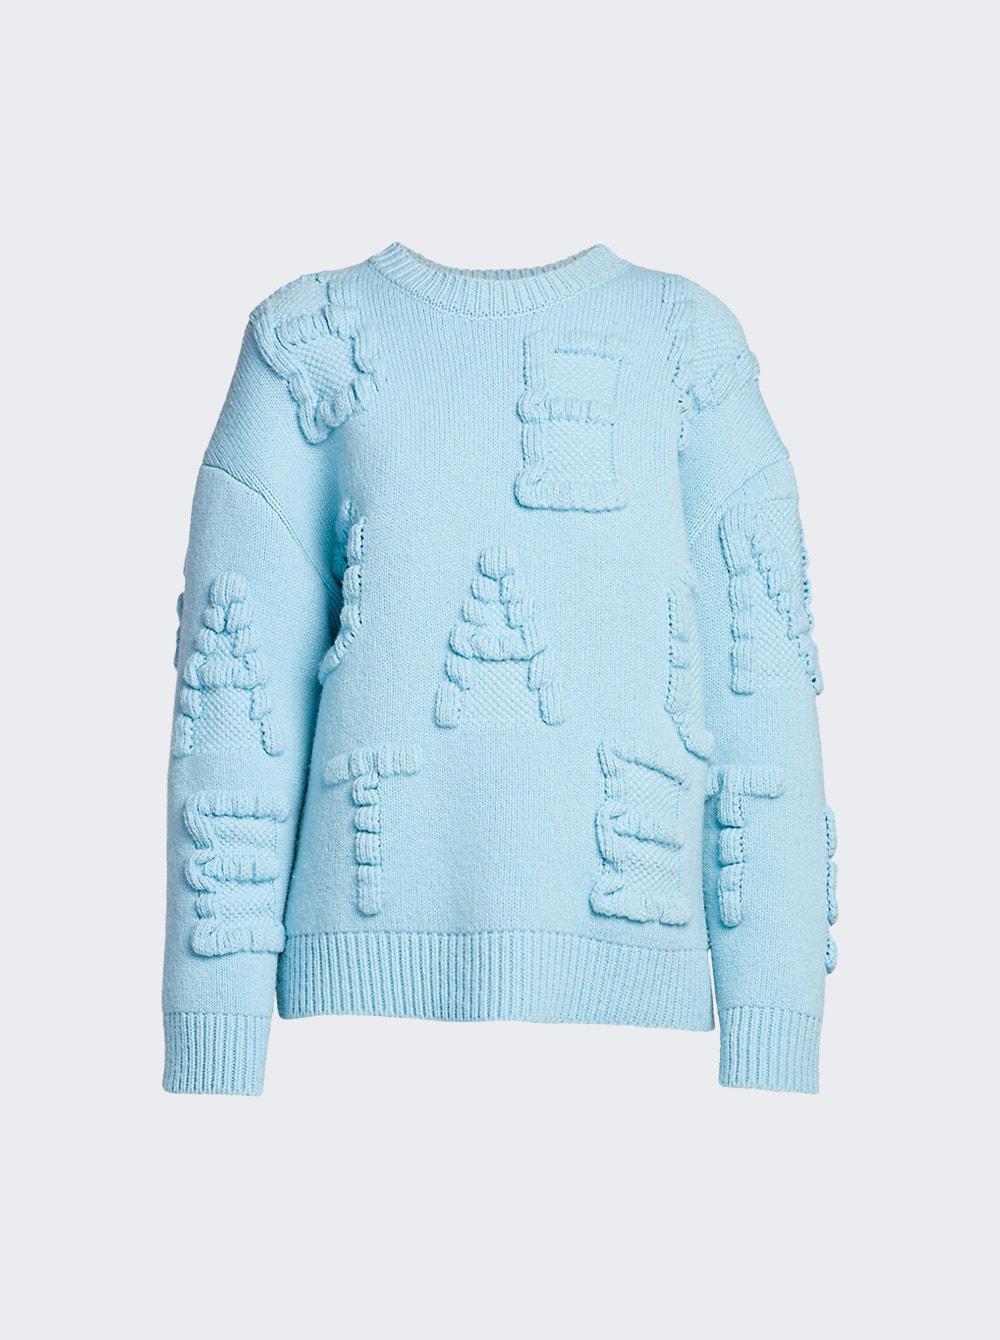 Alphabet Sweater Jumper Pale Blue by BOTTEGA VENETA